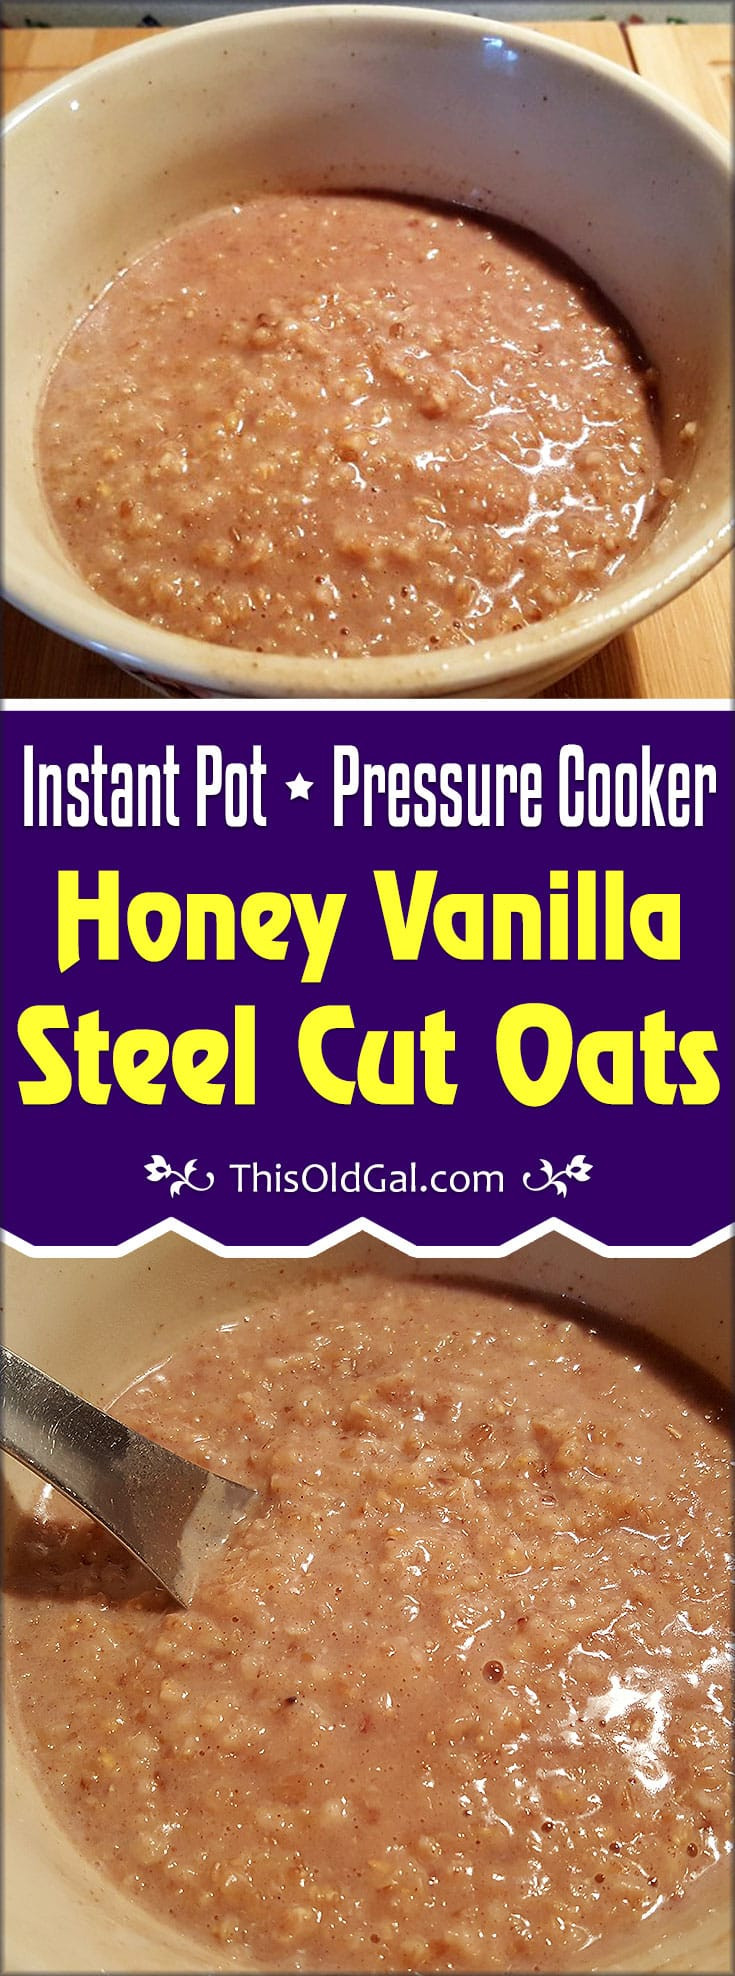 Steel Cut Oats In Pressure Cooker
 Pressure Cooker Honey Vanilla Steel Cut Oats